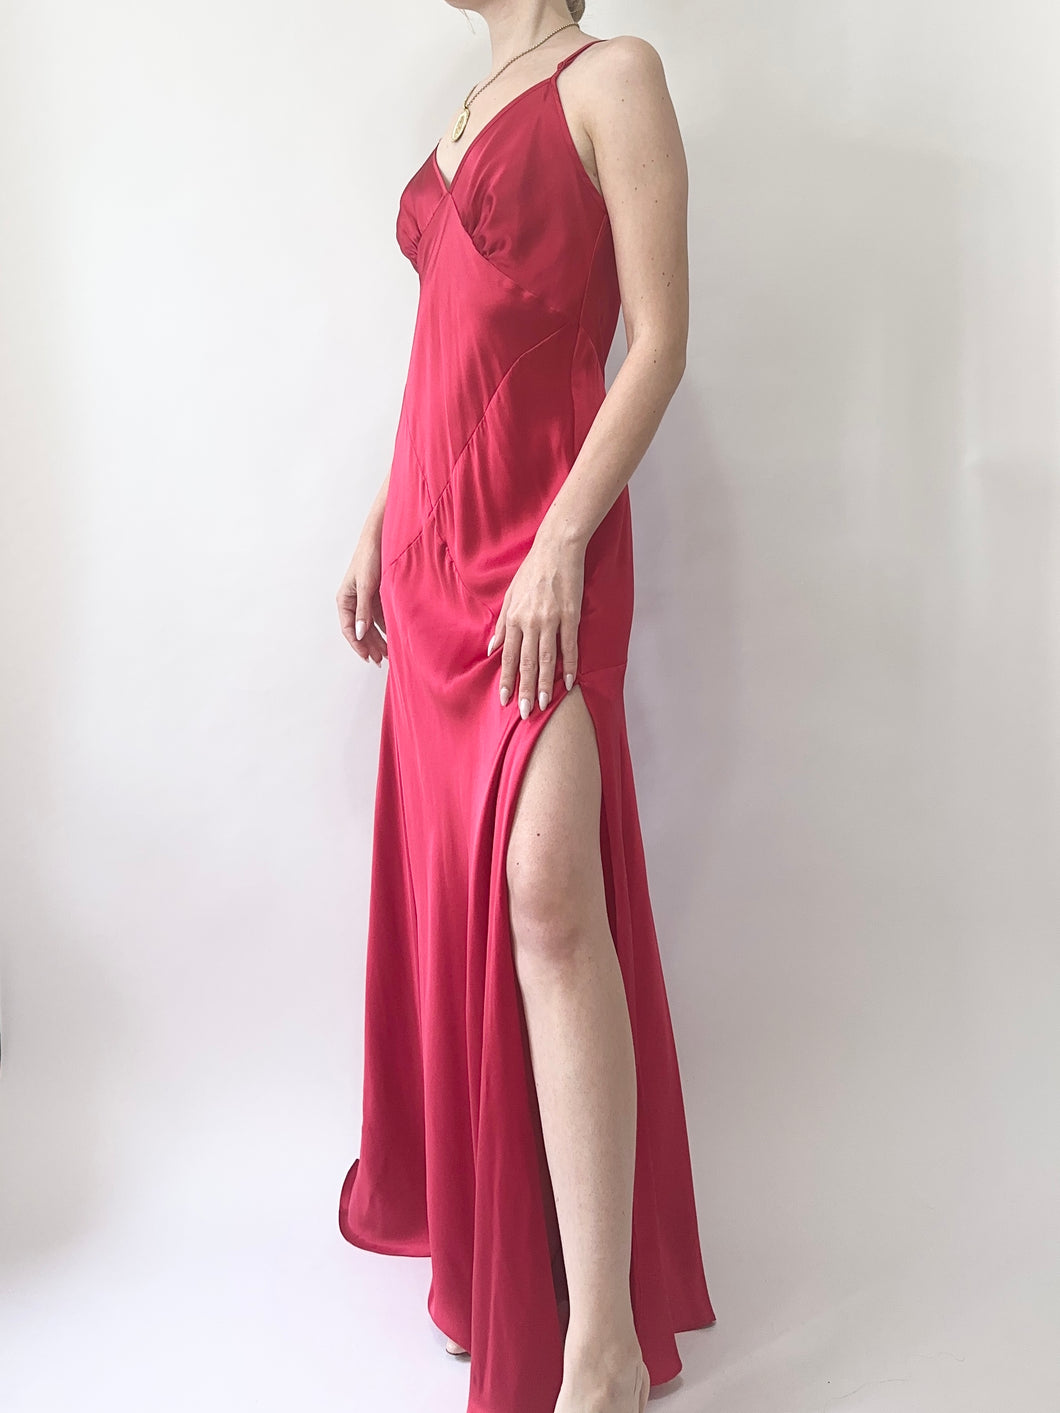 Victoria’s Secret Red Pure Silk Slip Gown (XS)